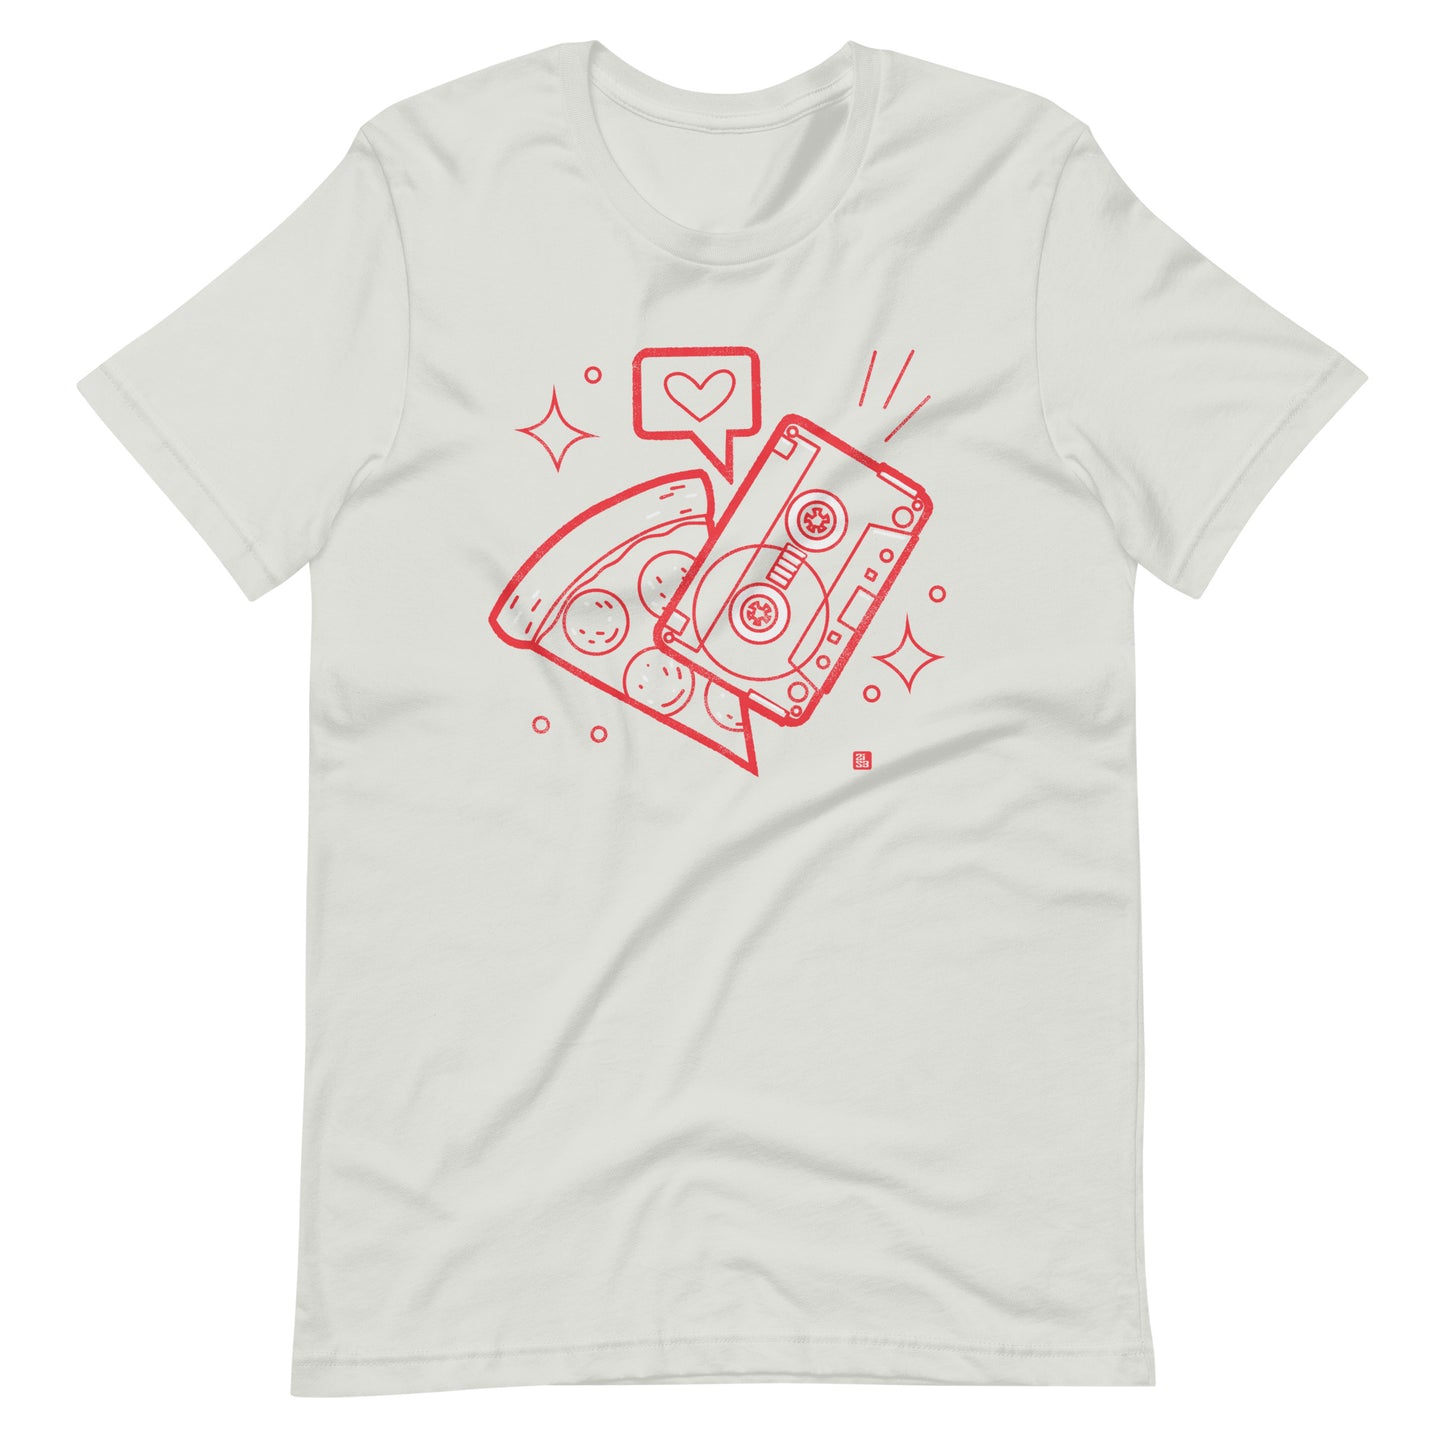 Pizza + Mixtape T-shirt